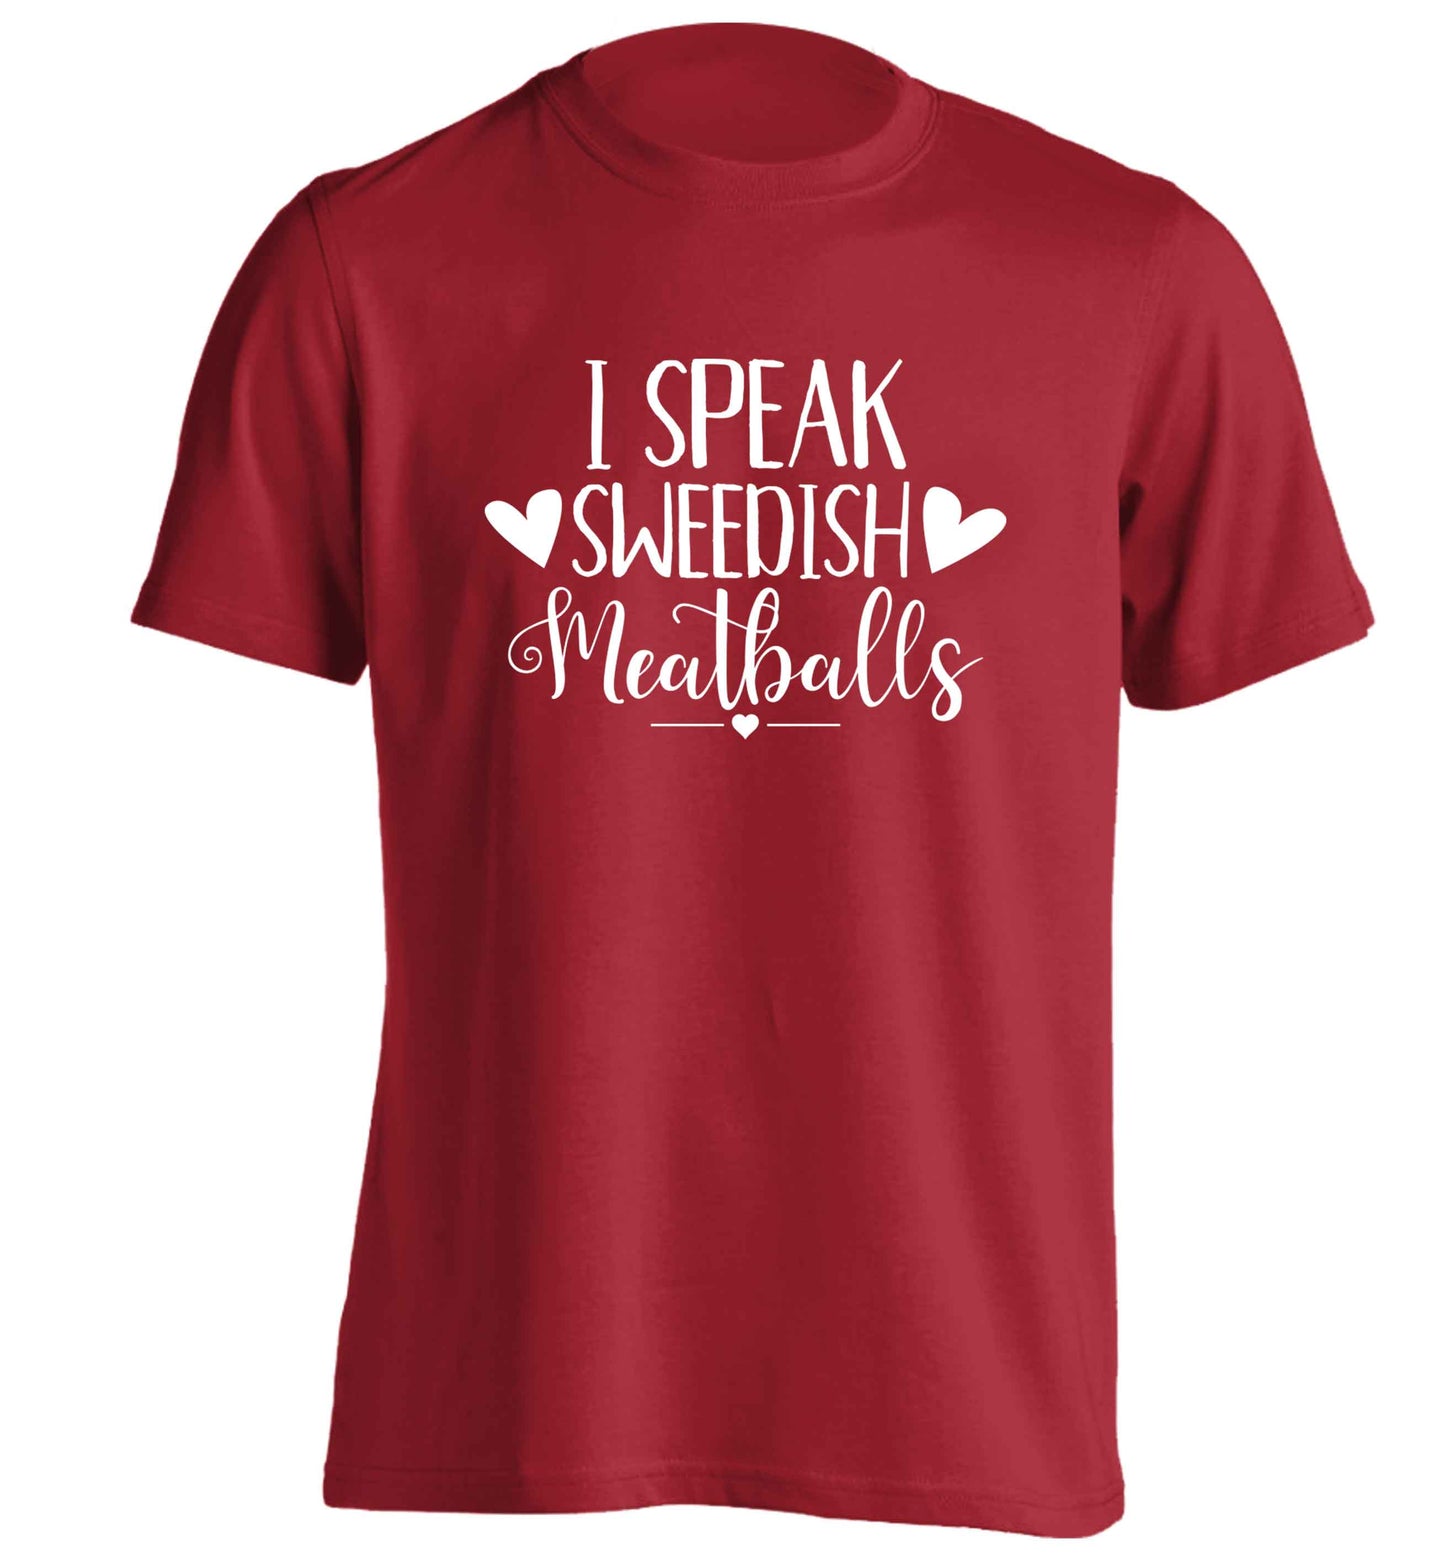 I speak sweedish...meatballs adults unisex red Tshirt 2XL